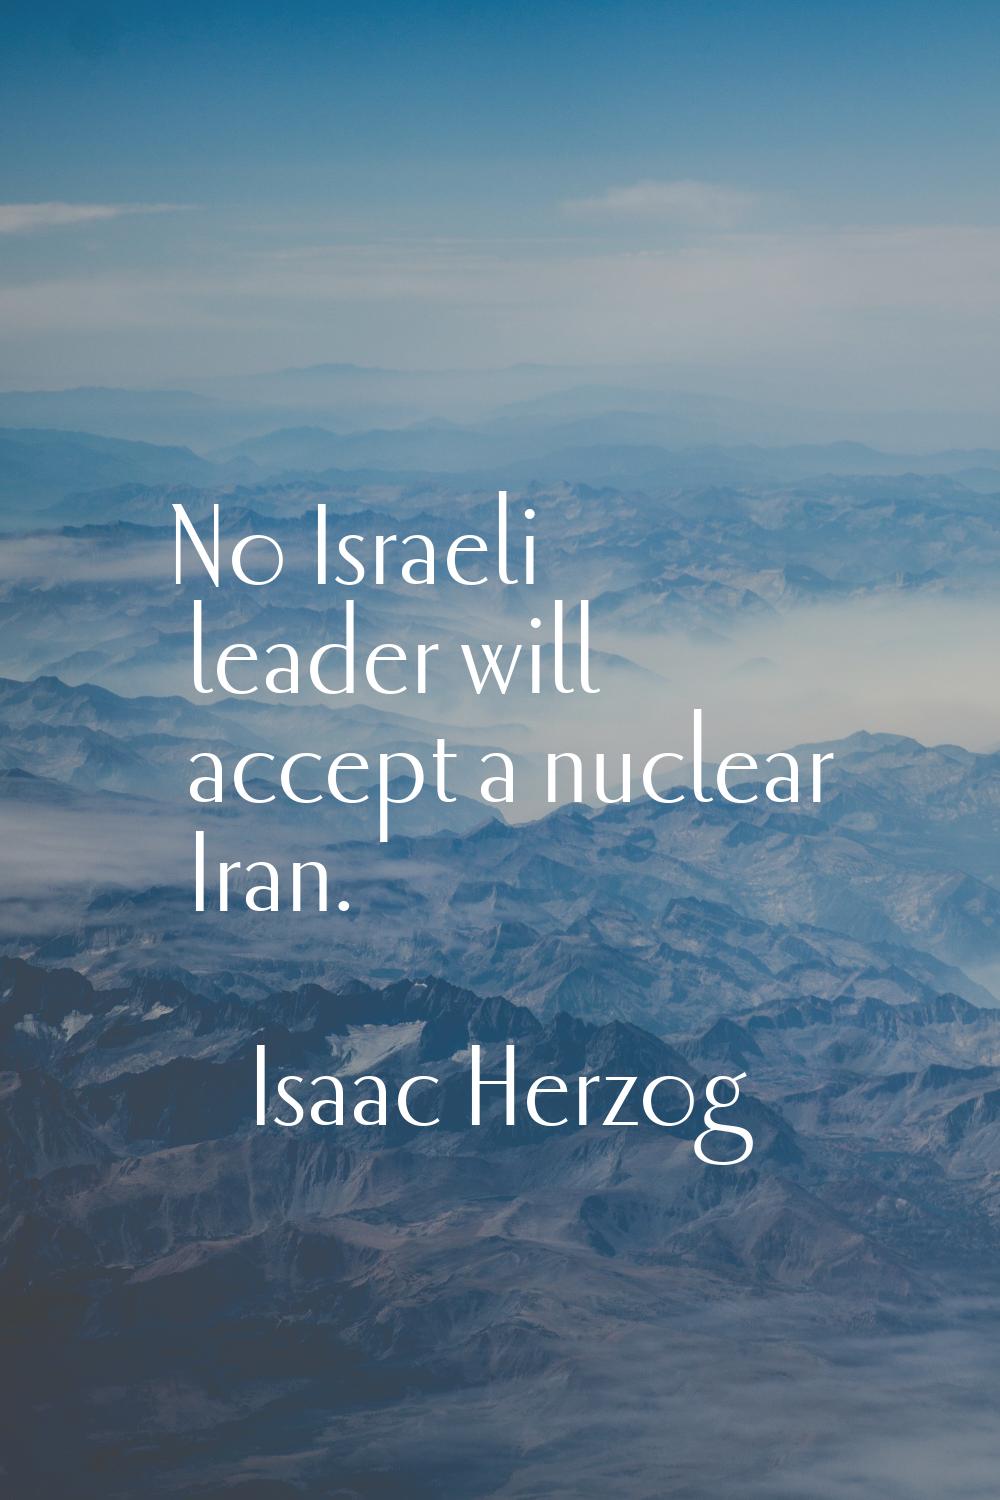 No Israeli leader will accept a nuclear Iran.